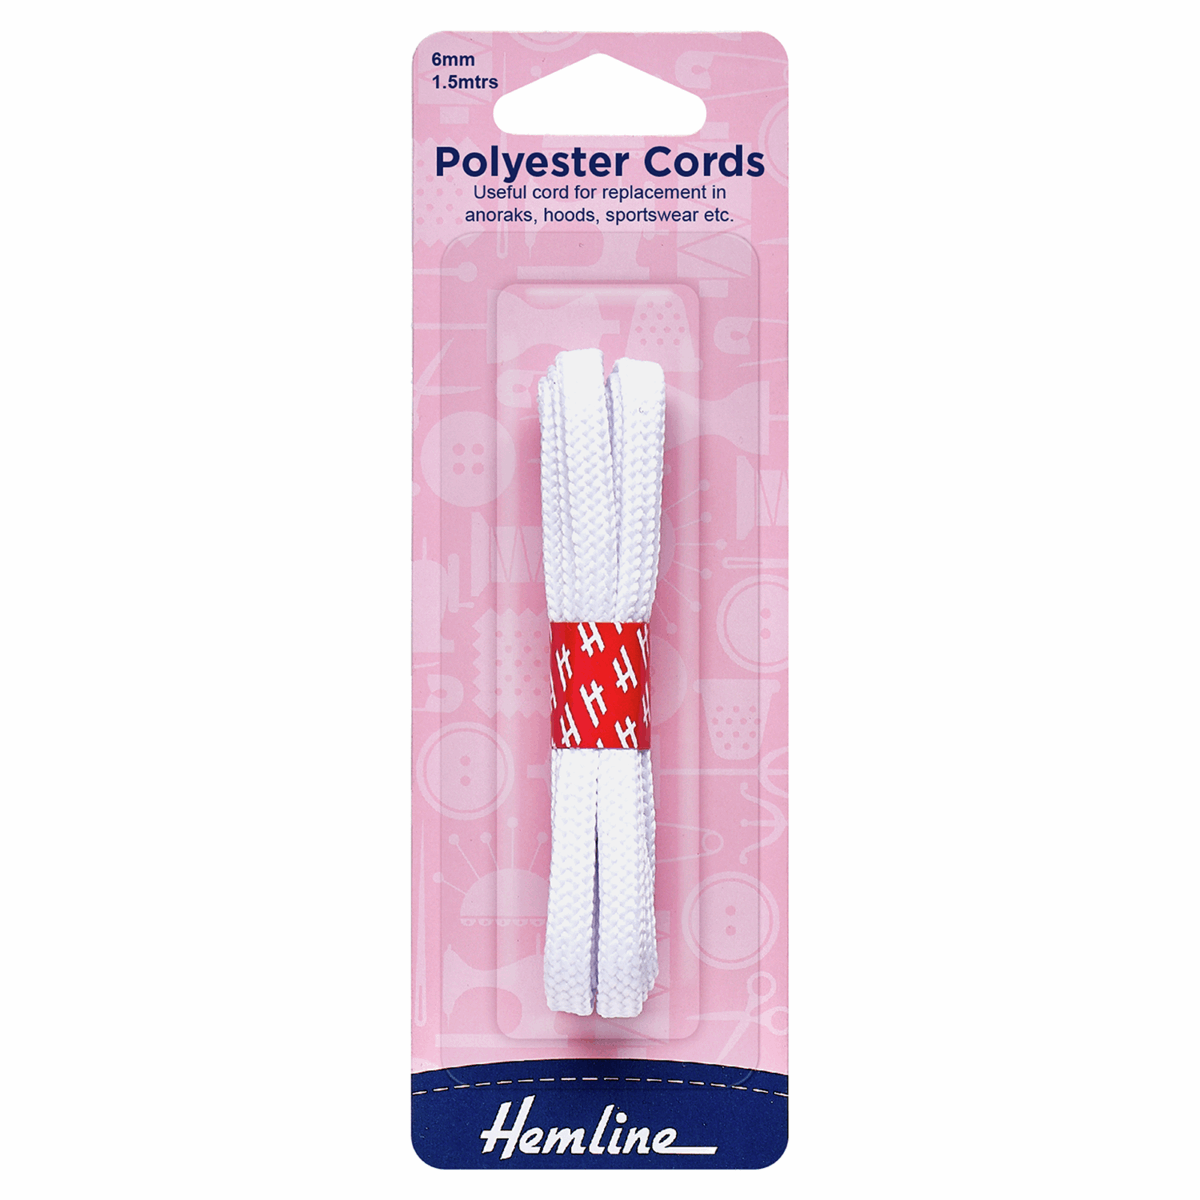 Hemline White Polyester Cord - 1.5m x 6mm